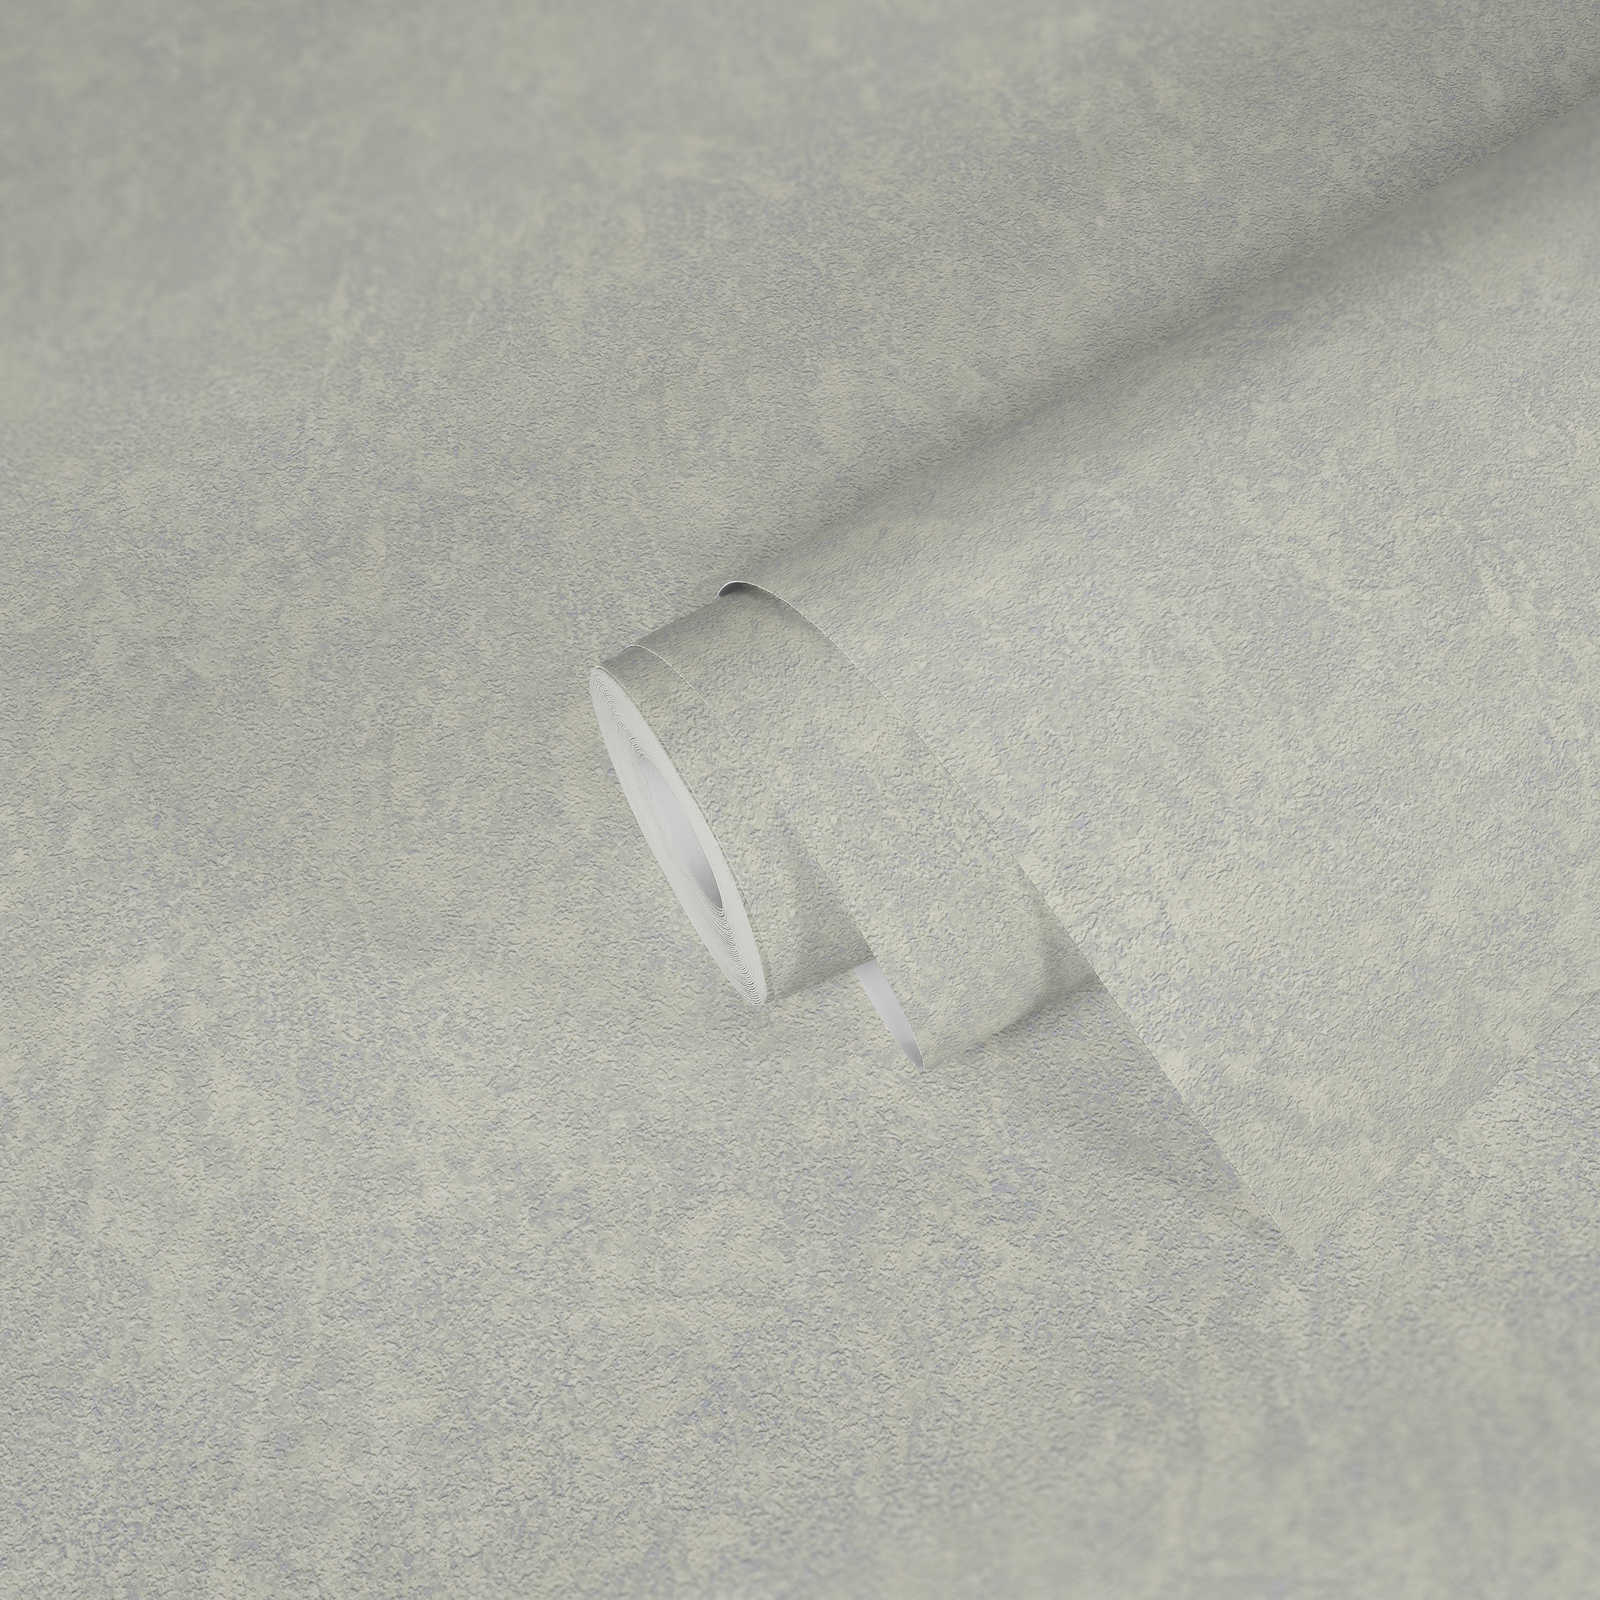             Tapete Wandputz-Optik mit Struktureffekt & melierter Farbe – Grau
        